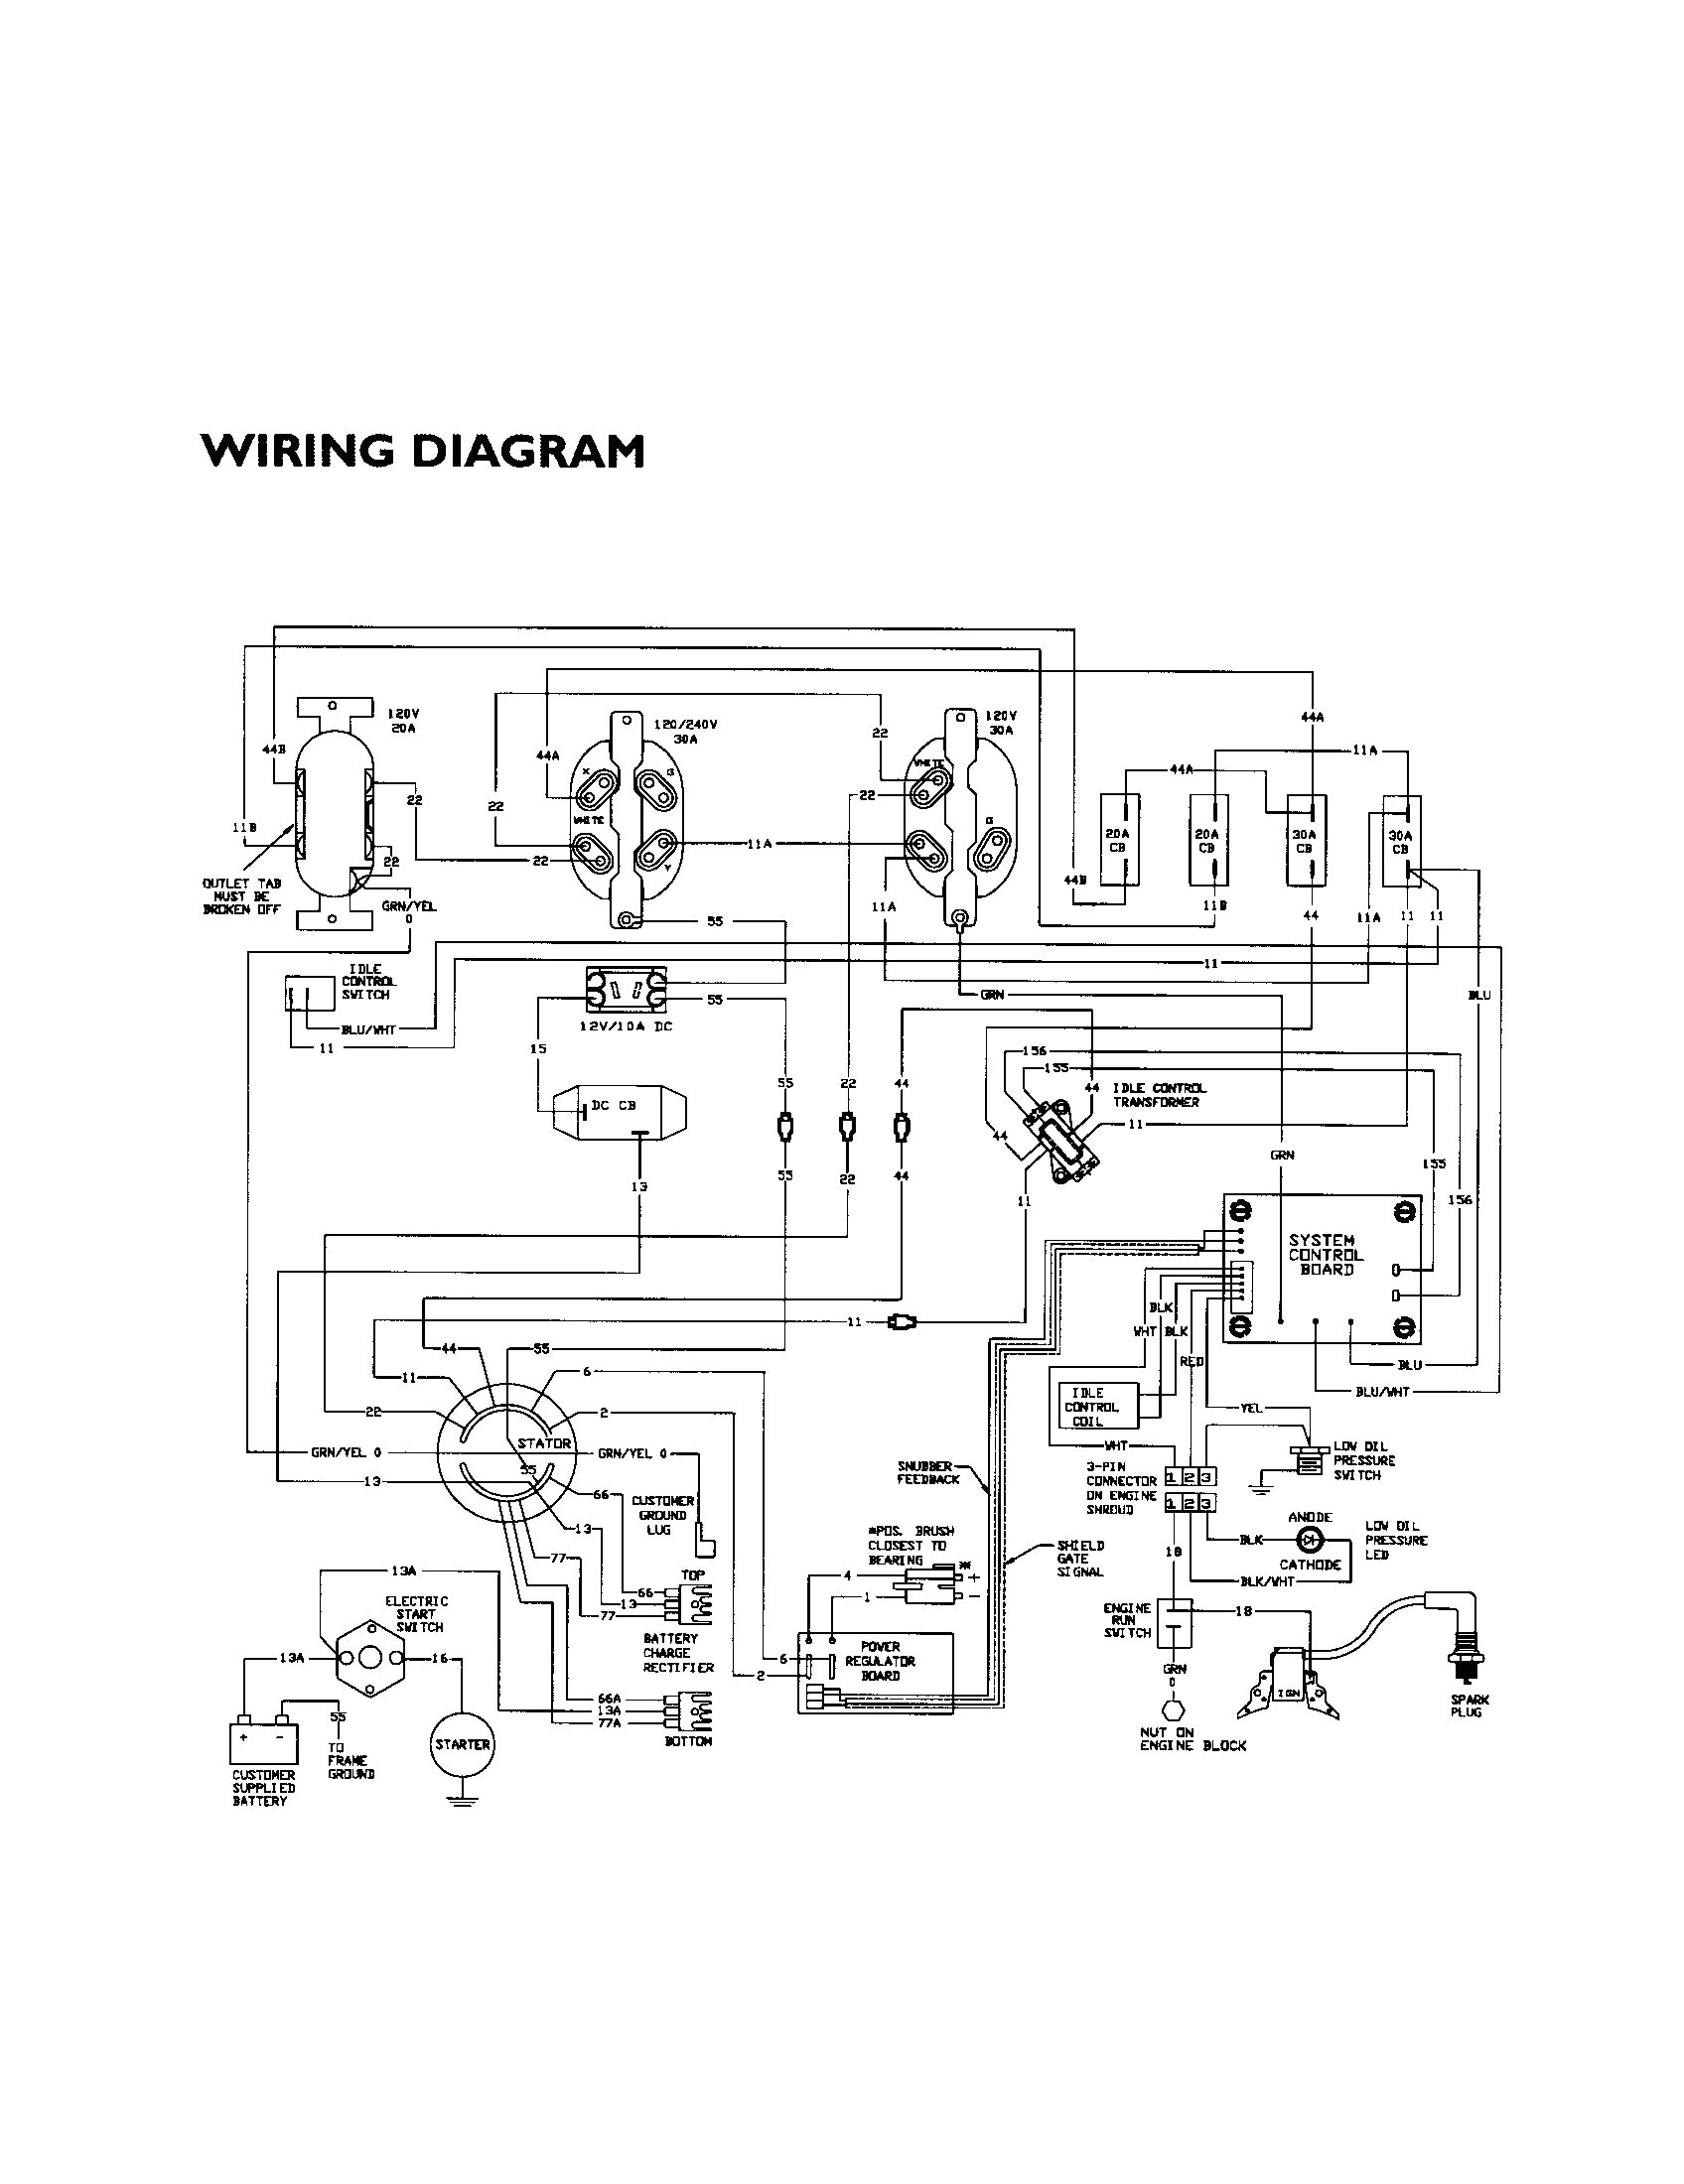 10 kw generac wiring diagram wiring diagram long 8 kw generac wiring diagram wiring diagrams 10